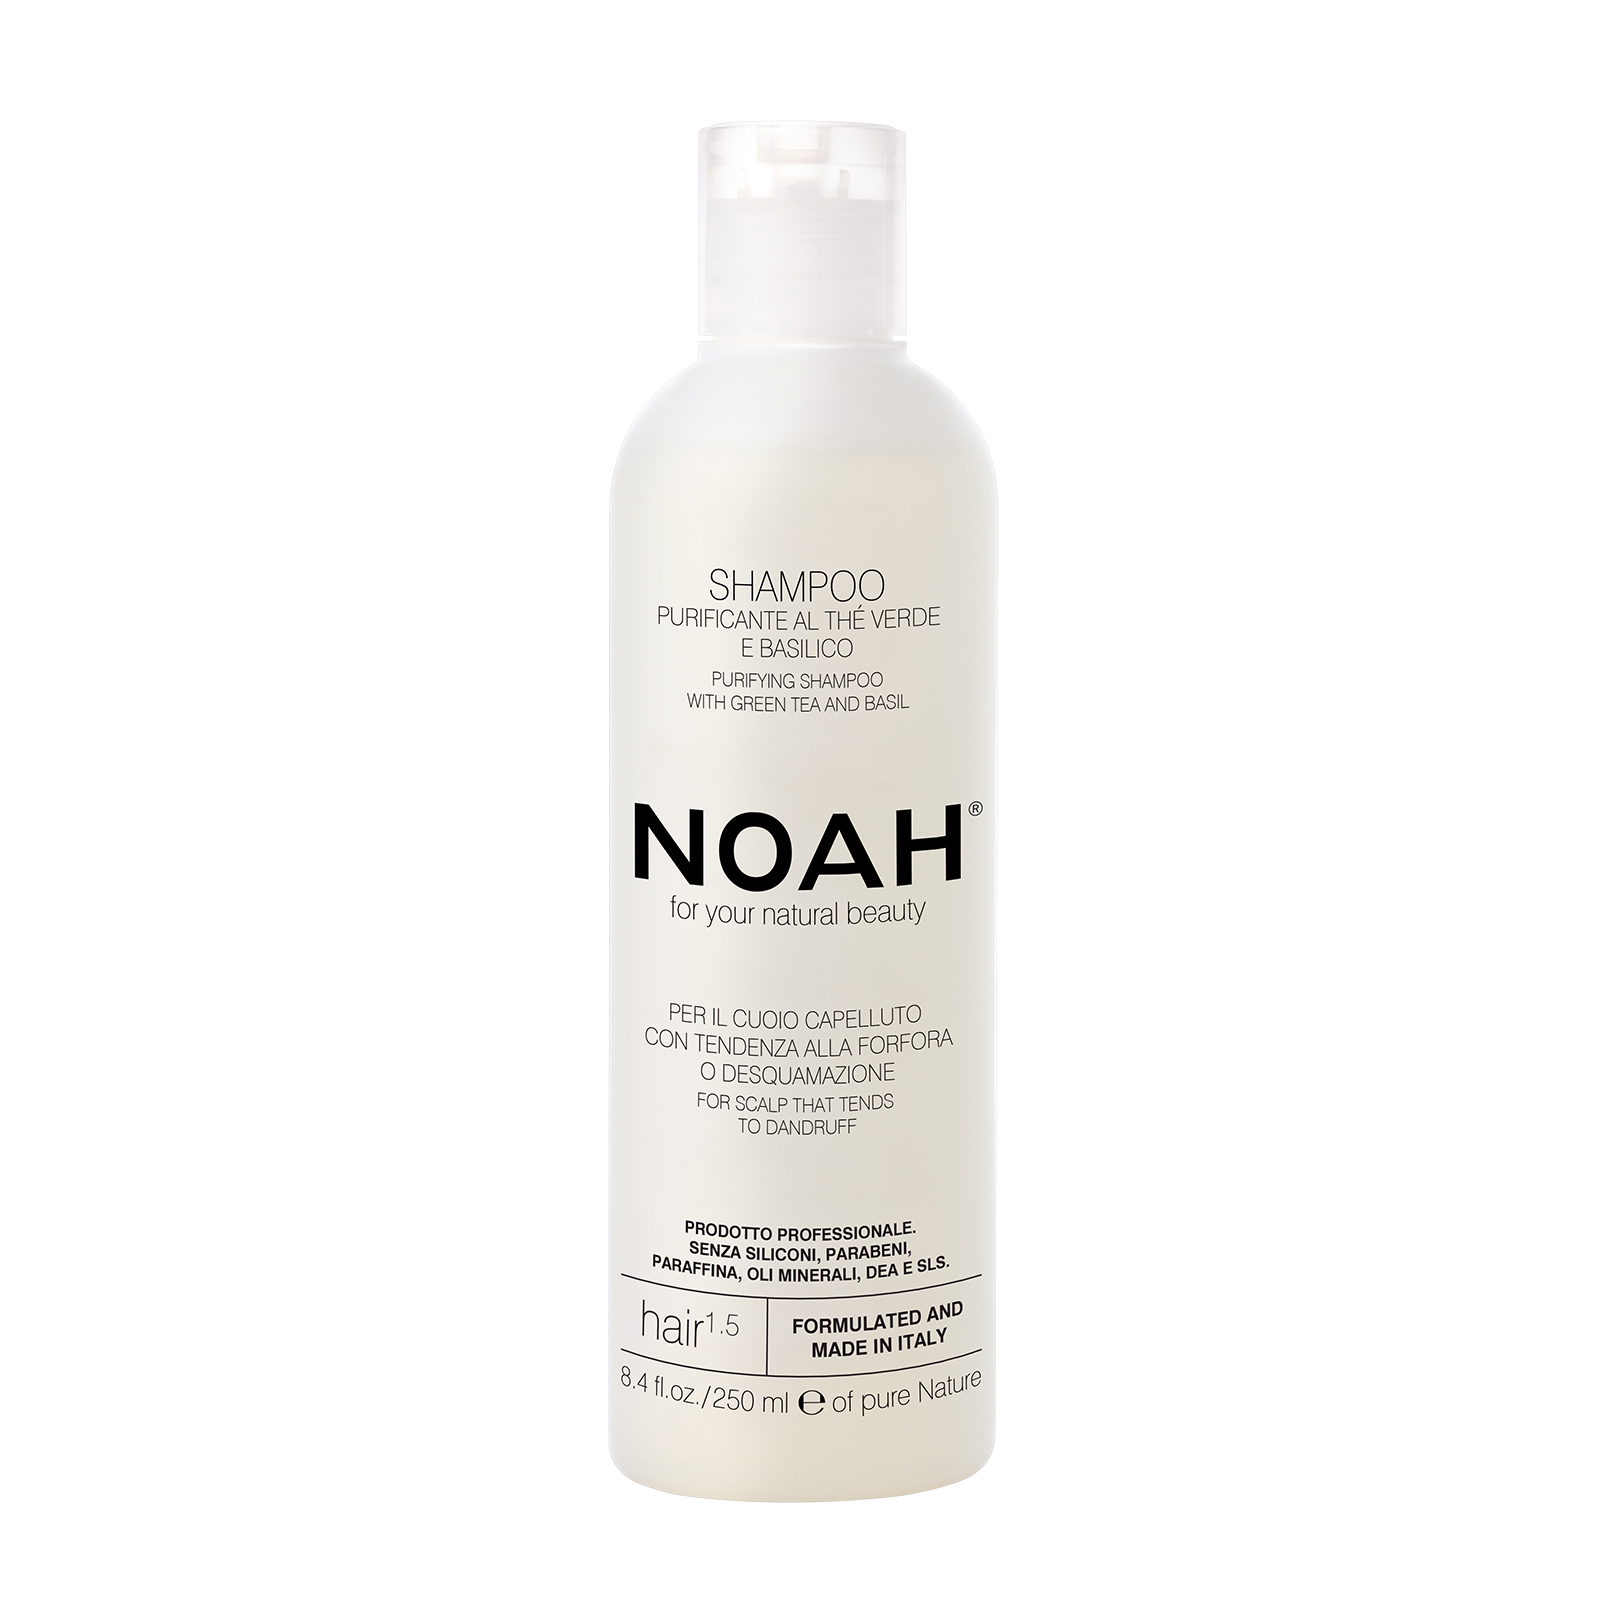 1.5-Shampoo-Naturale-per-capelli-tendenti-alla-forfora_NOAH_250ml